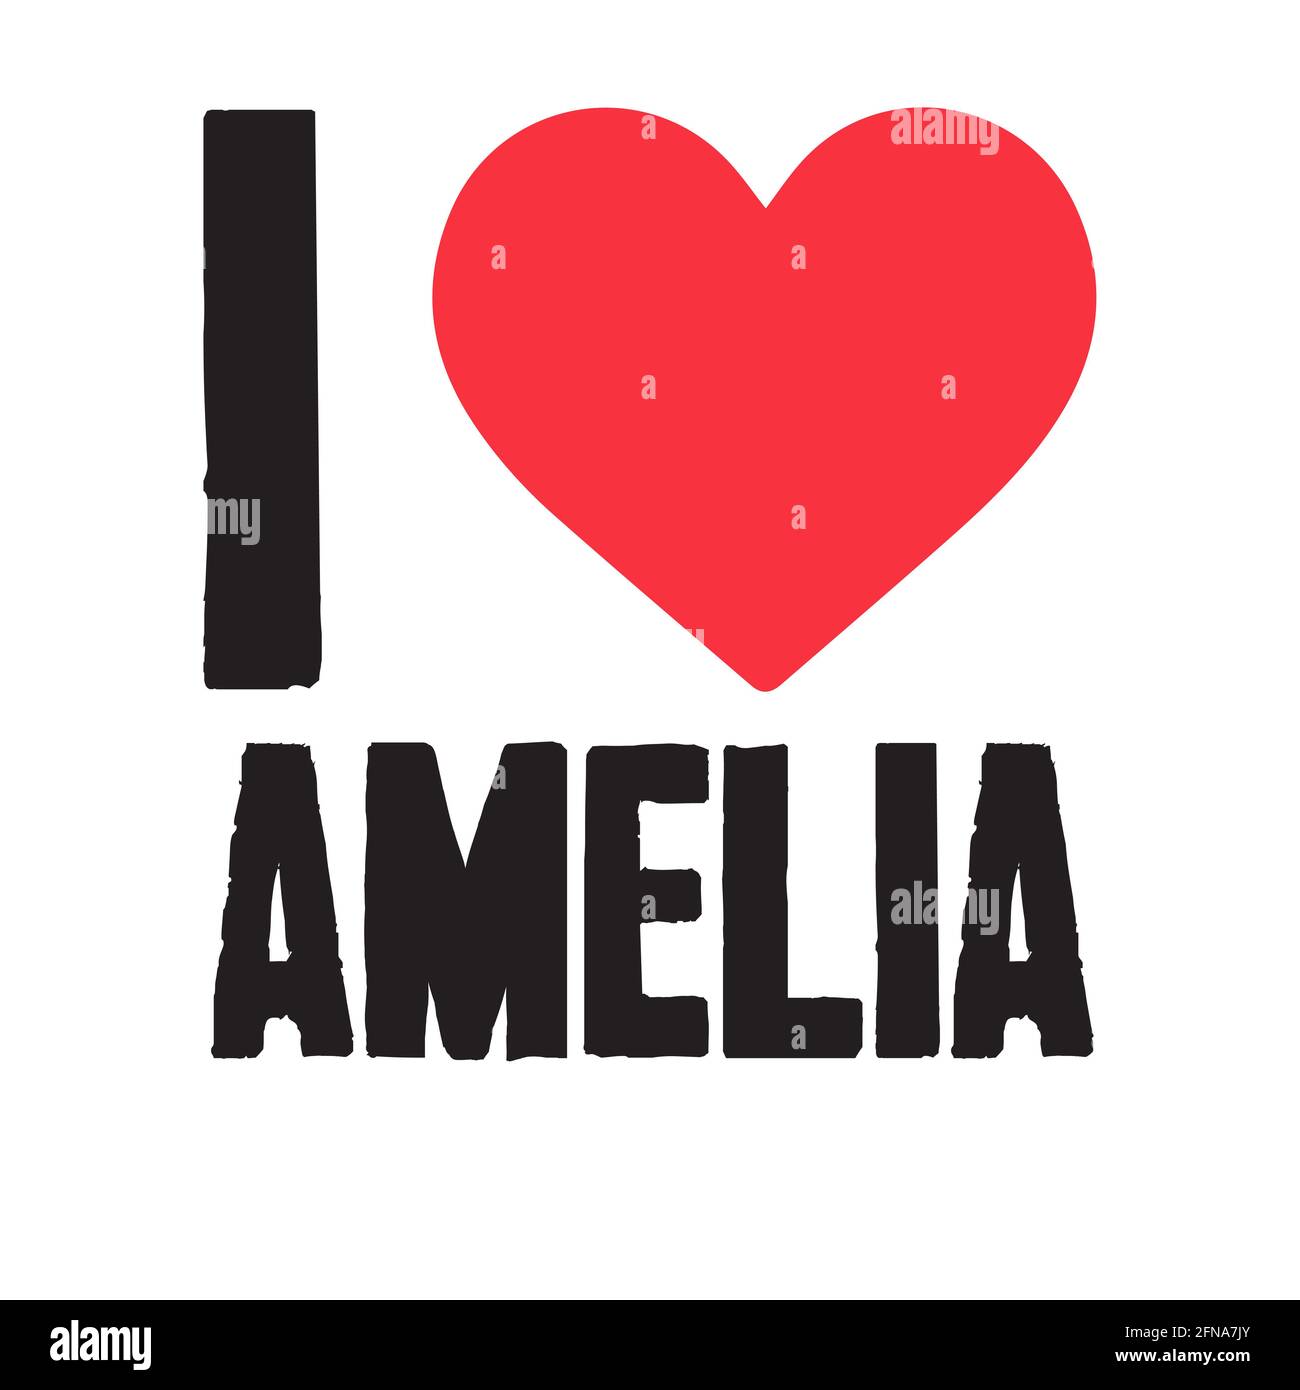 amelia girl name Stock Photo - Alamy